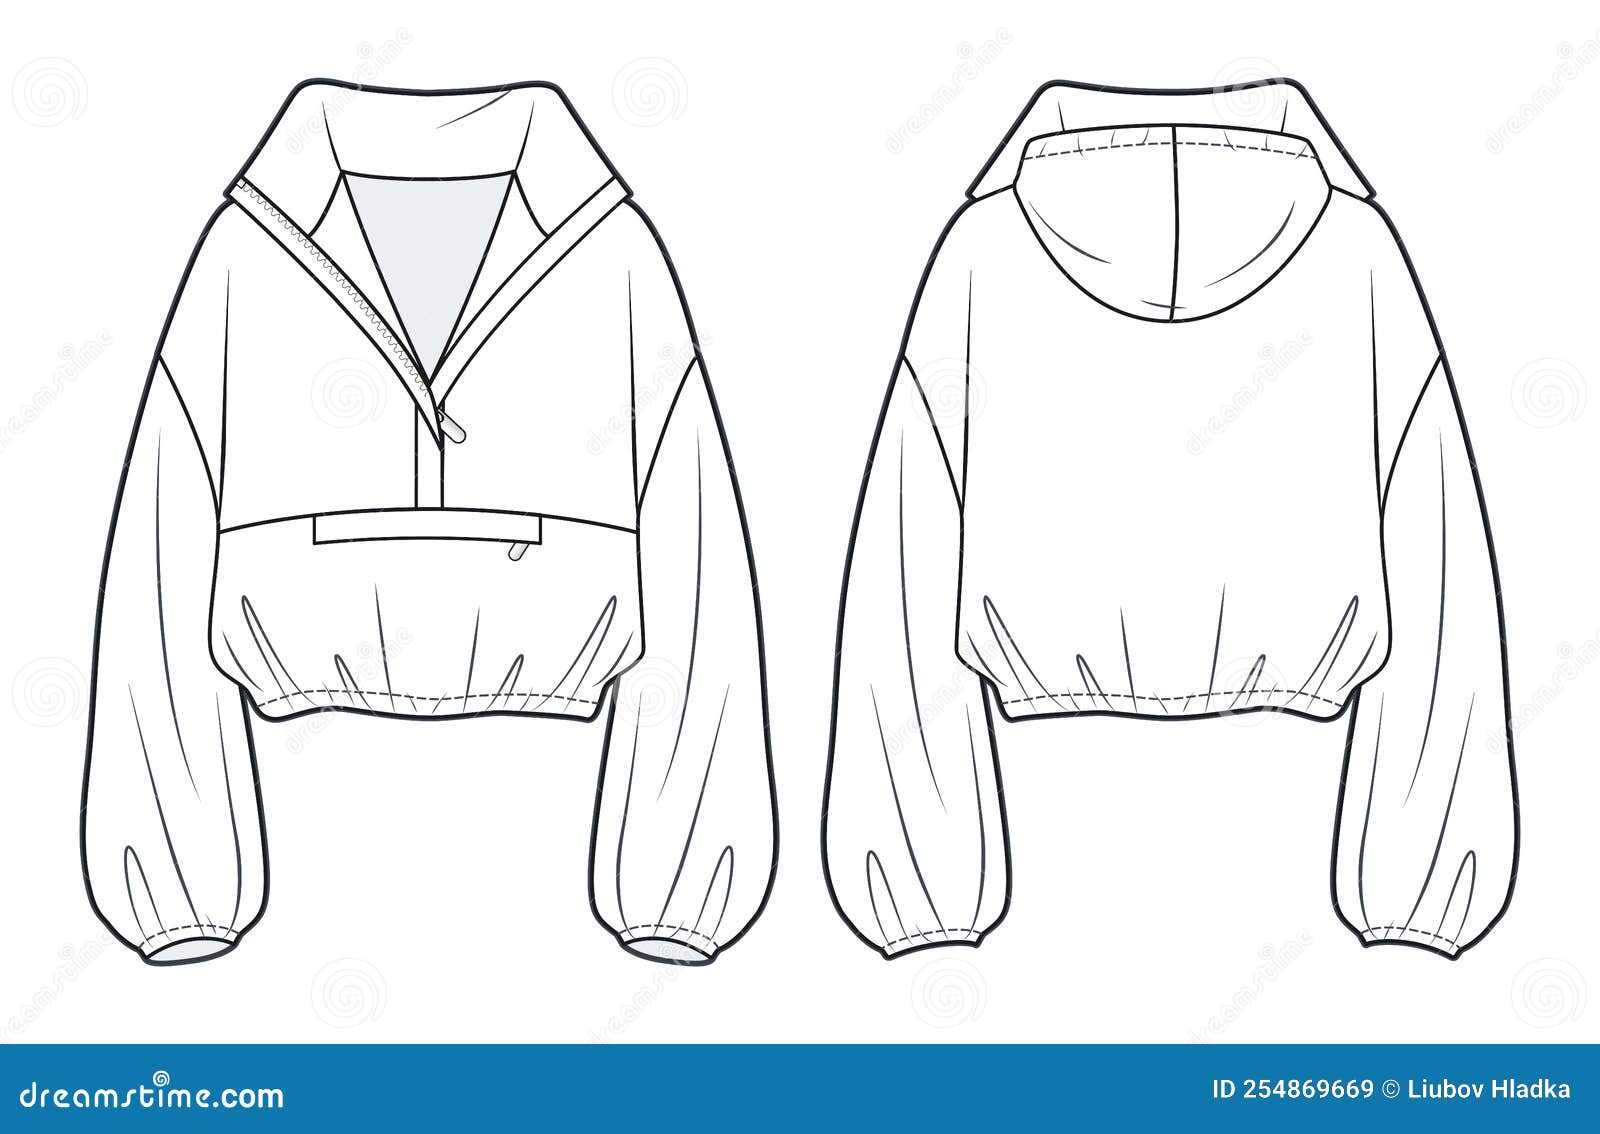 Hooded Crop Sweatshirt Technical Fashion Illustration. Stock Vector ...